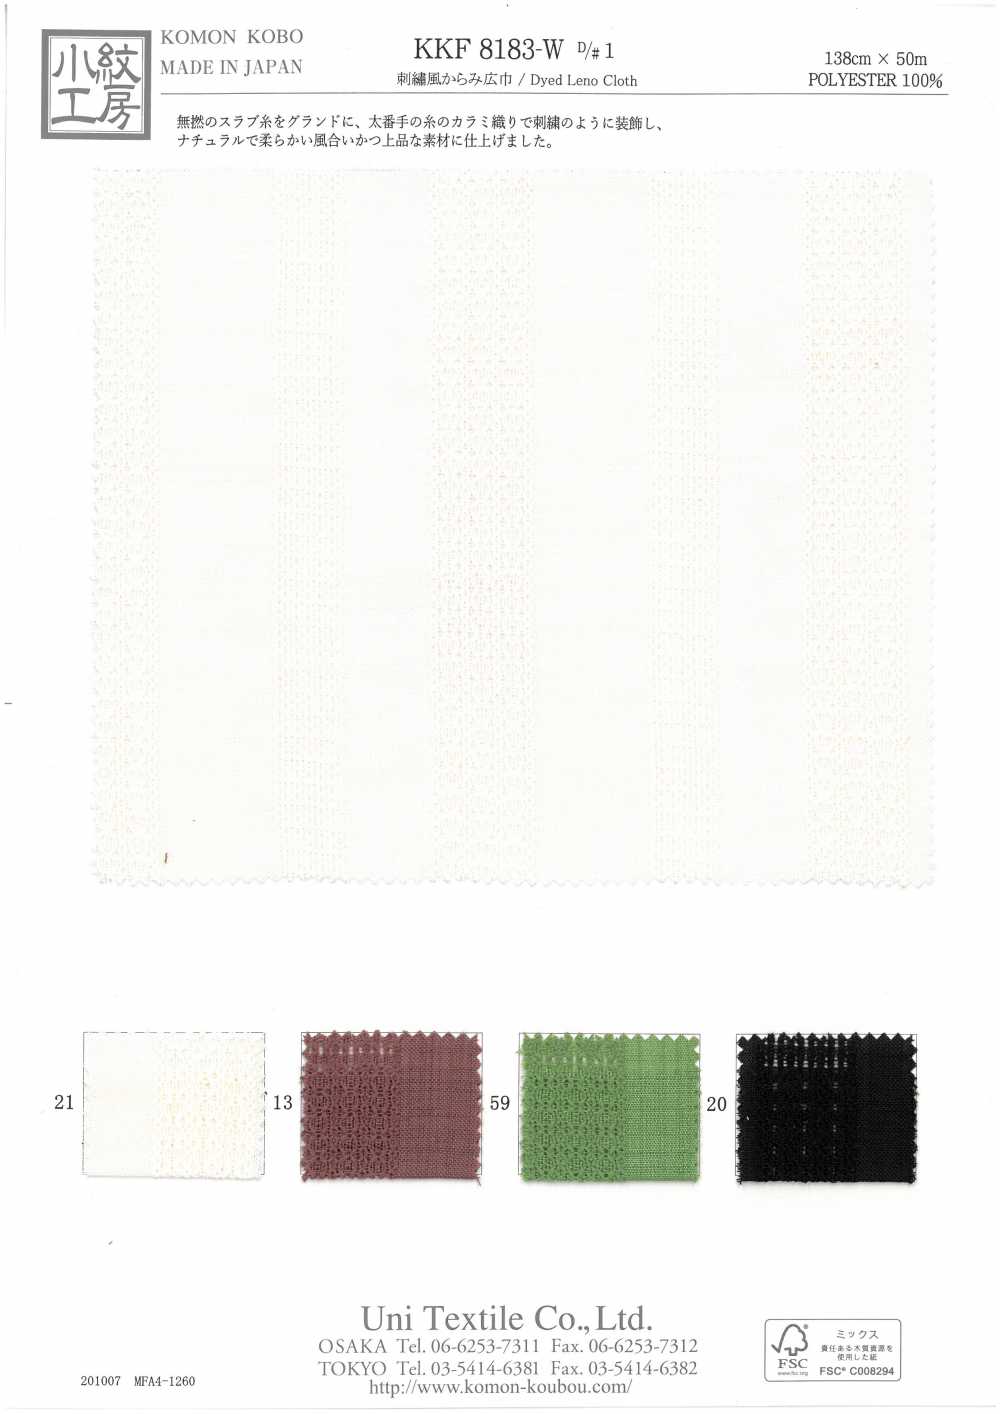 KKF8183-W-D/1 Stile Ricamo Ampia Larghezza[Tessile / Tessuto] Uni Textile